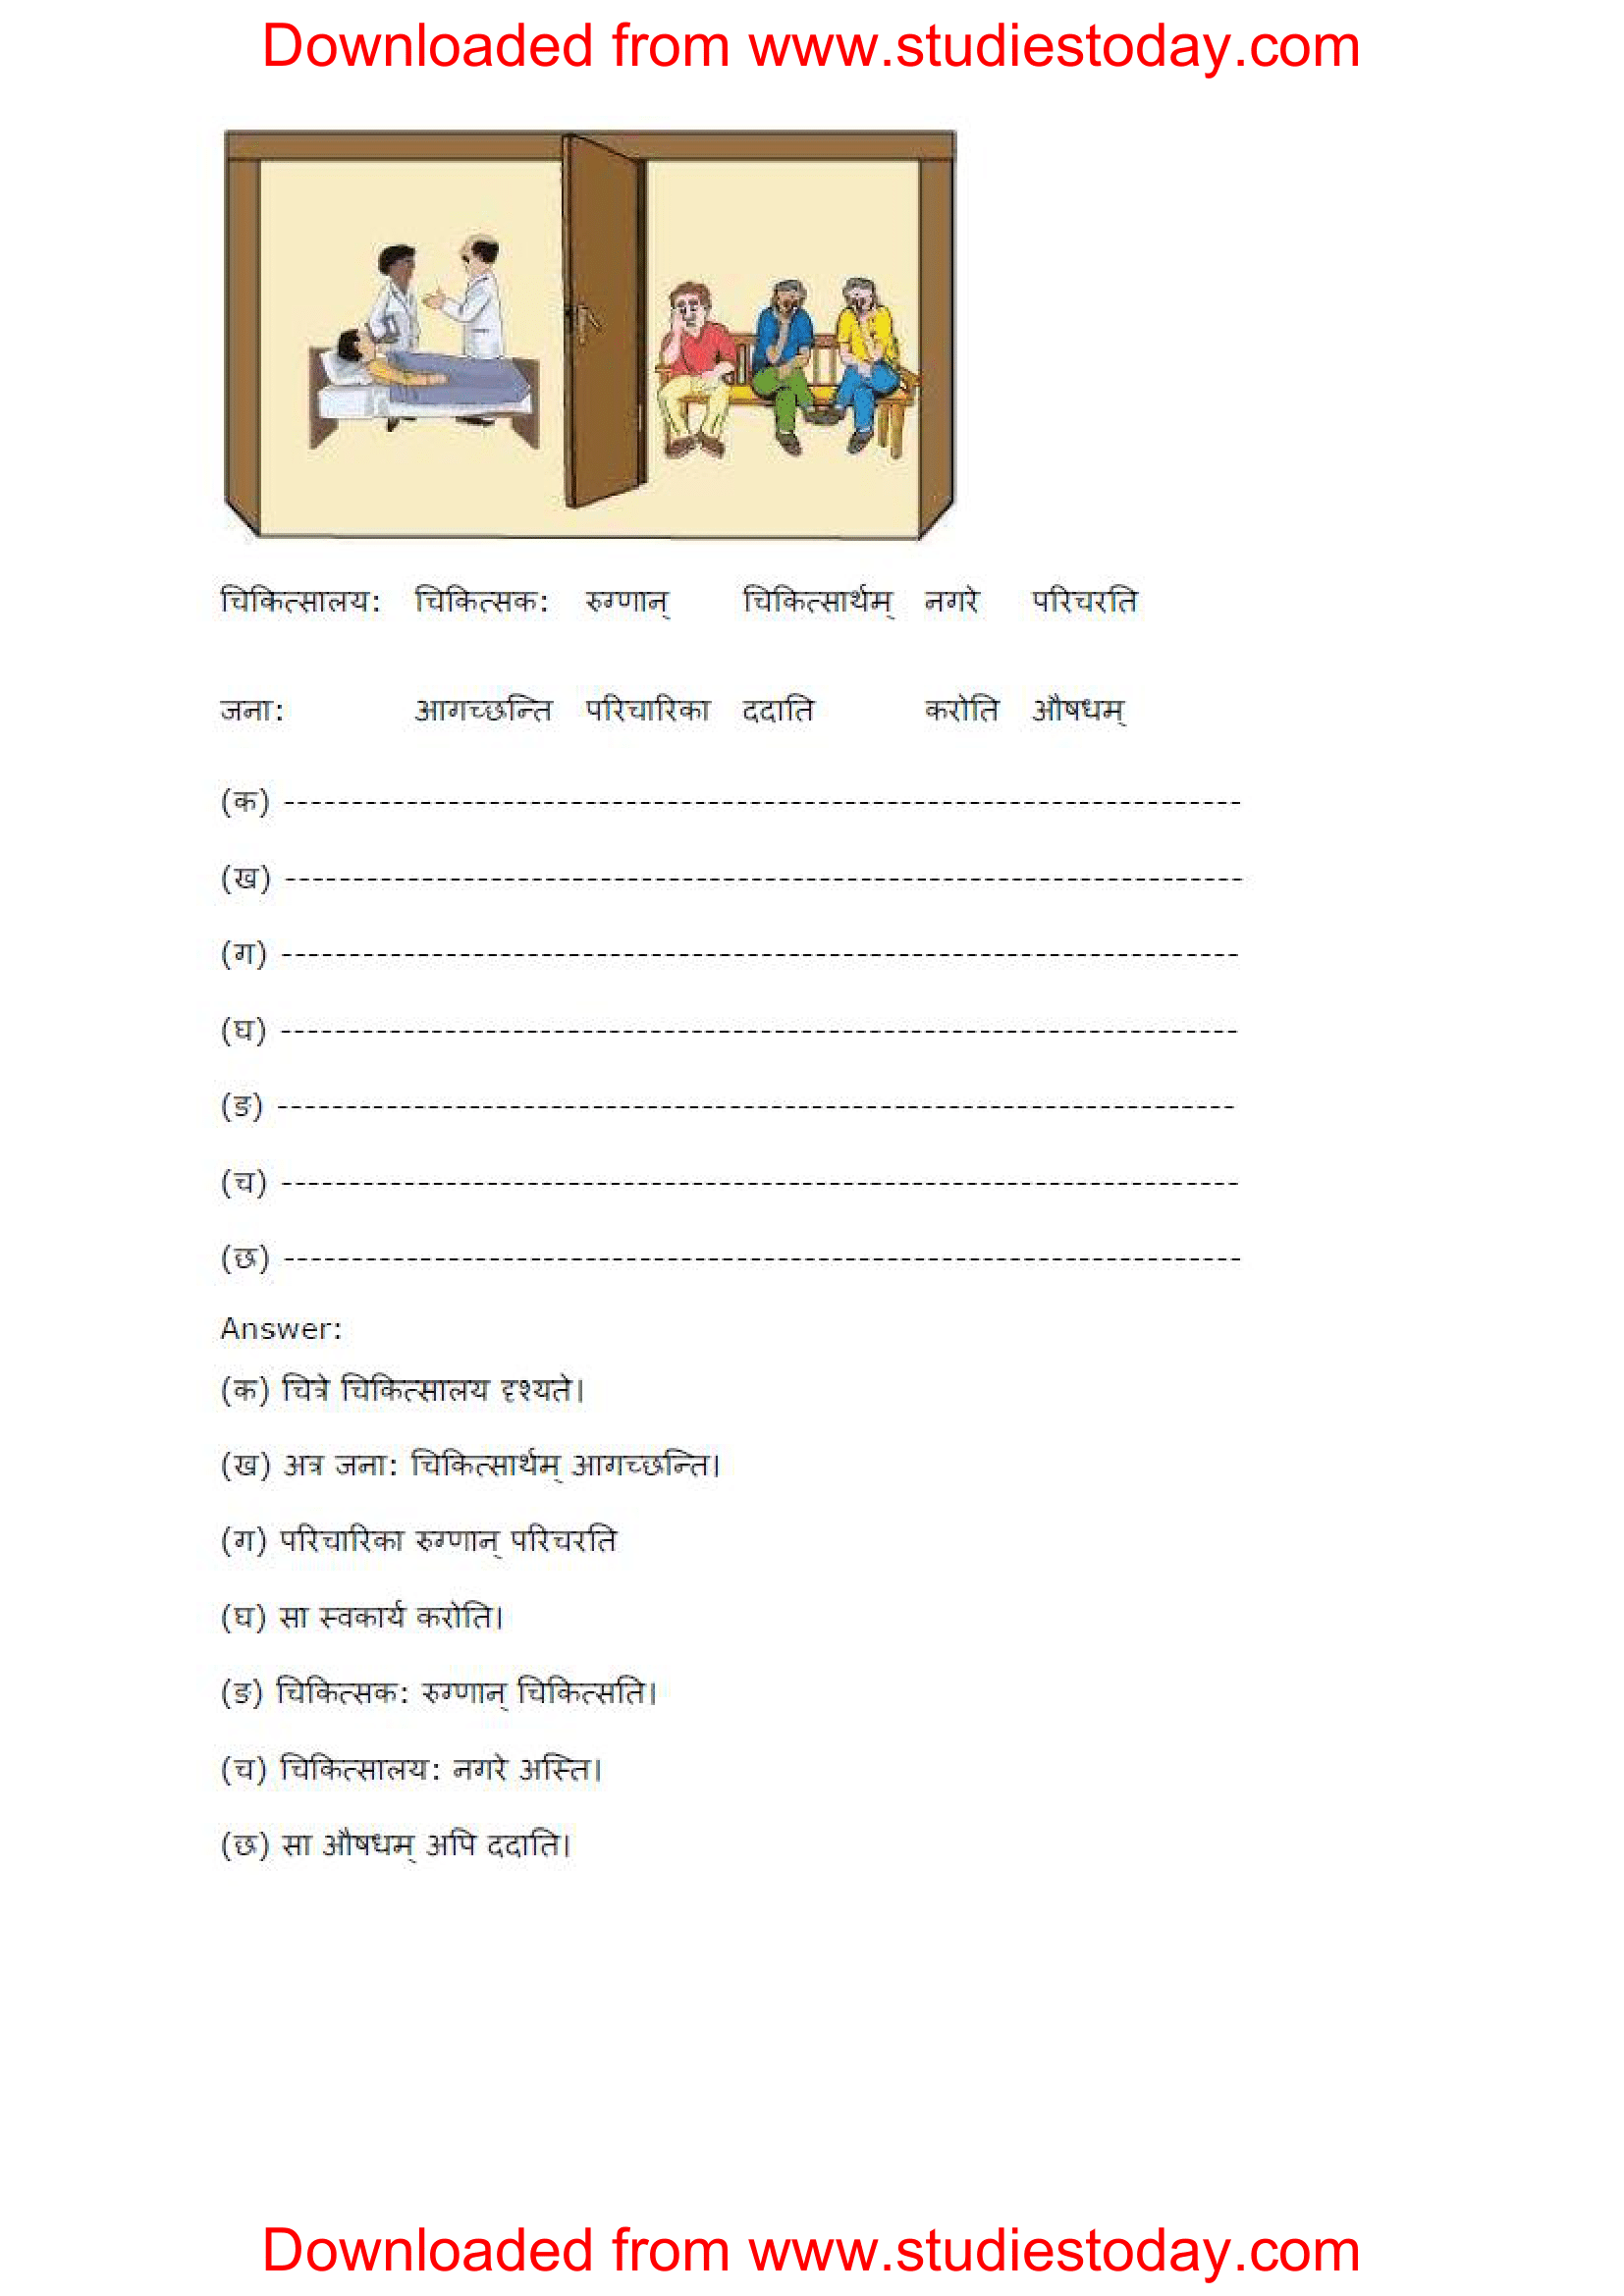 ncert-solutions-class-8-sanskrit-chapter-7-jalvahini-5